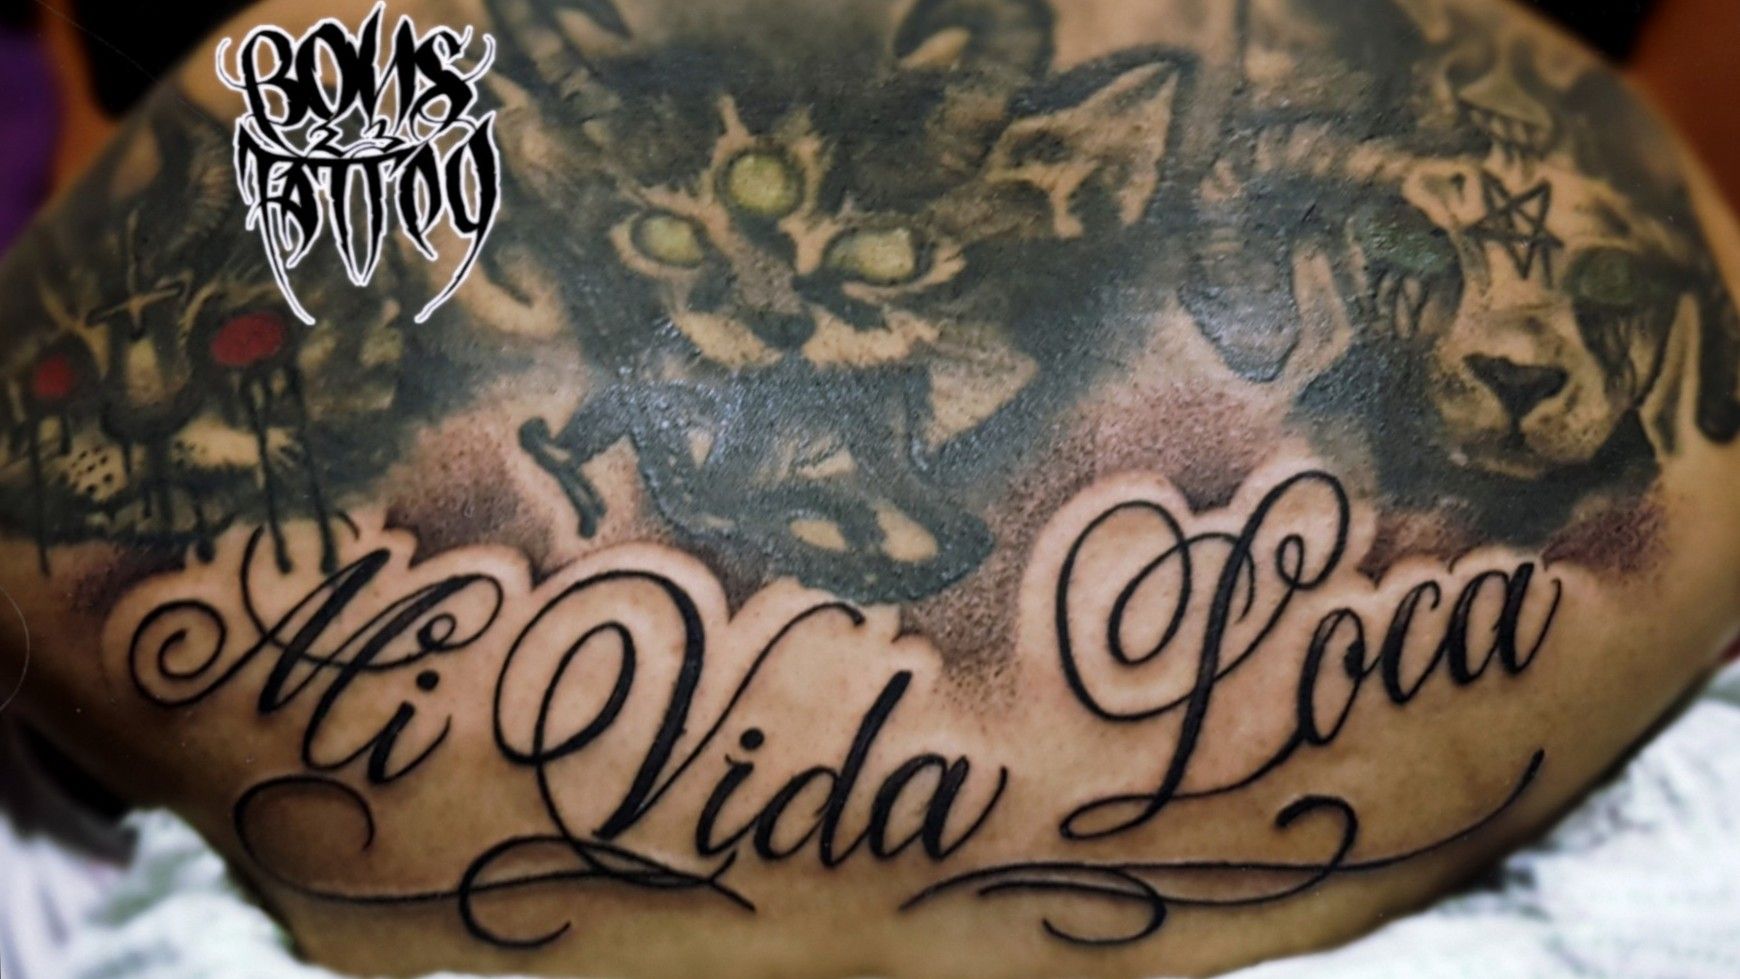 Mi vida loca lettering tattoo handwritten on the back